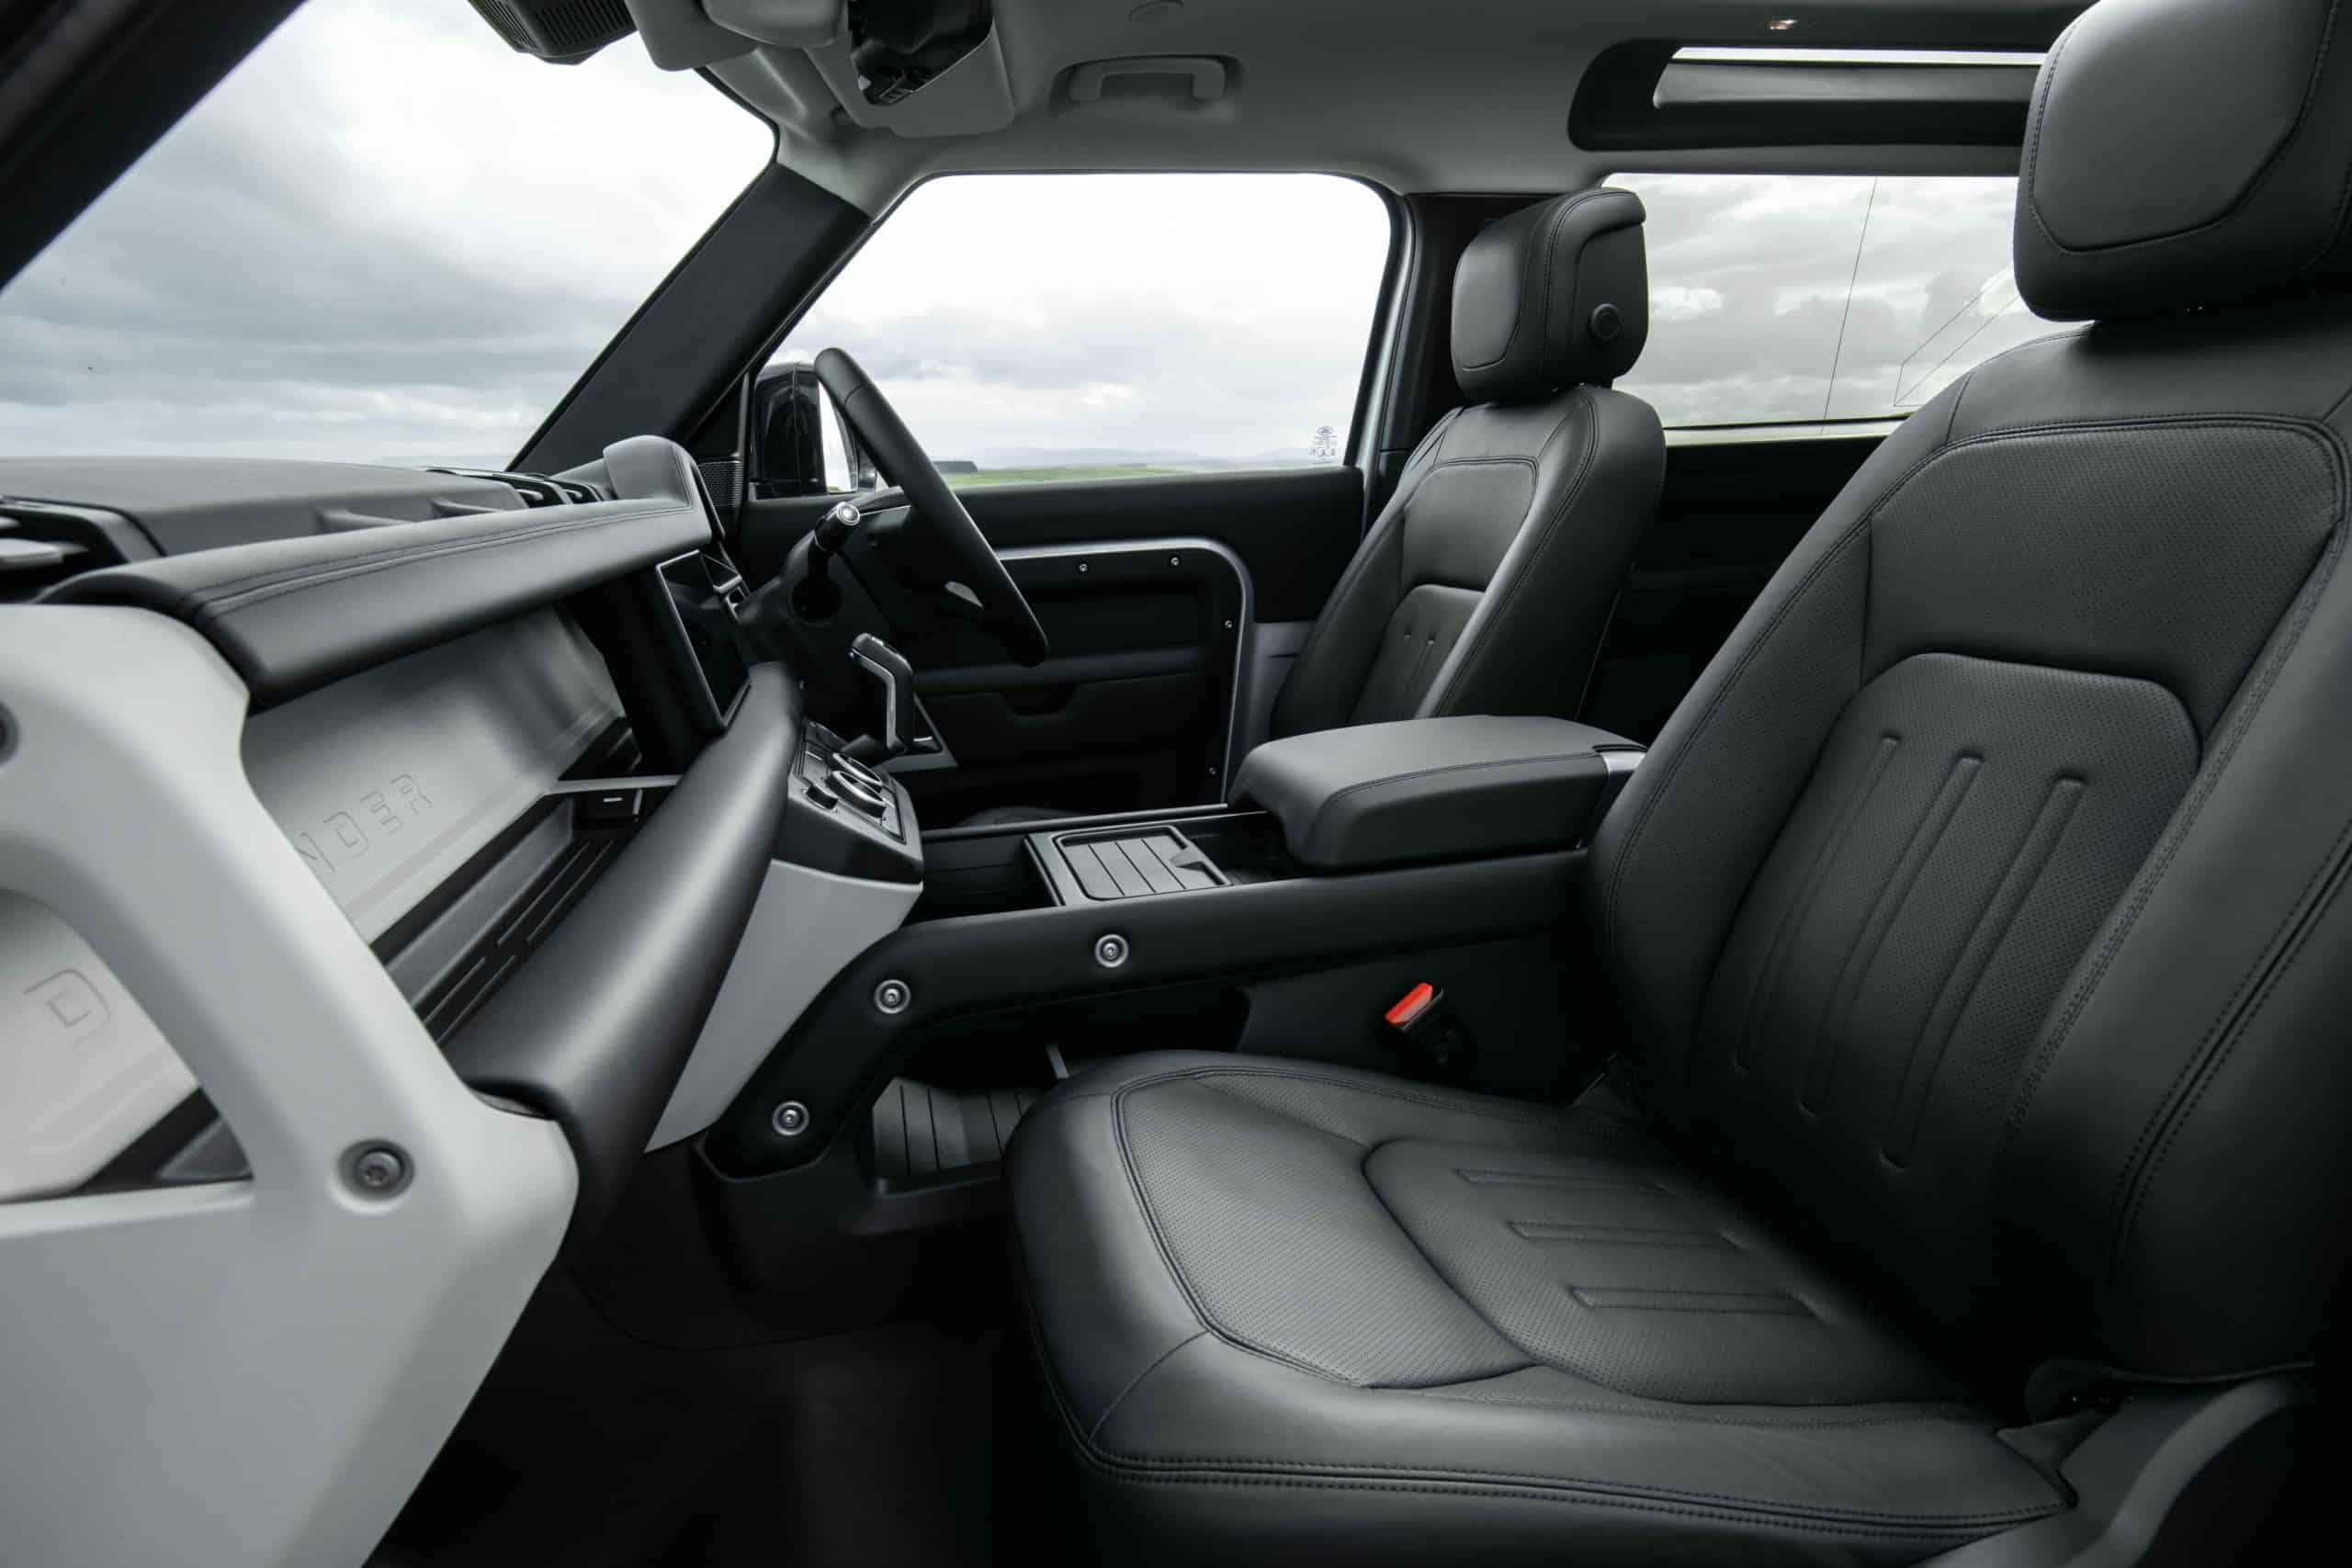 2021 Land Rover Defender 90 interior